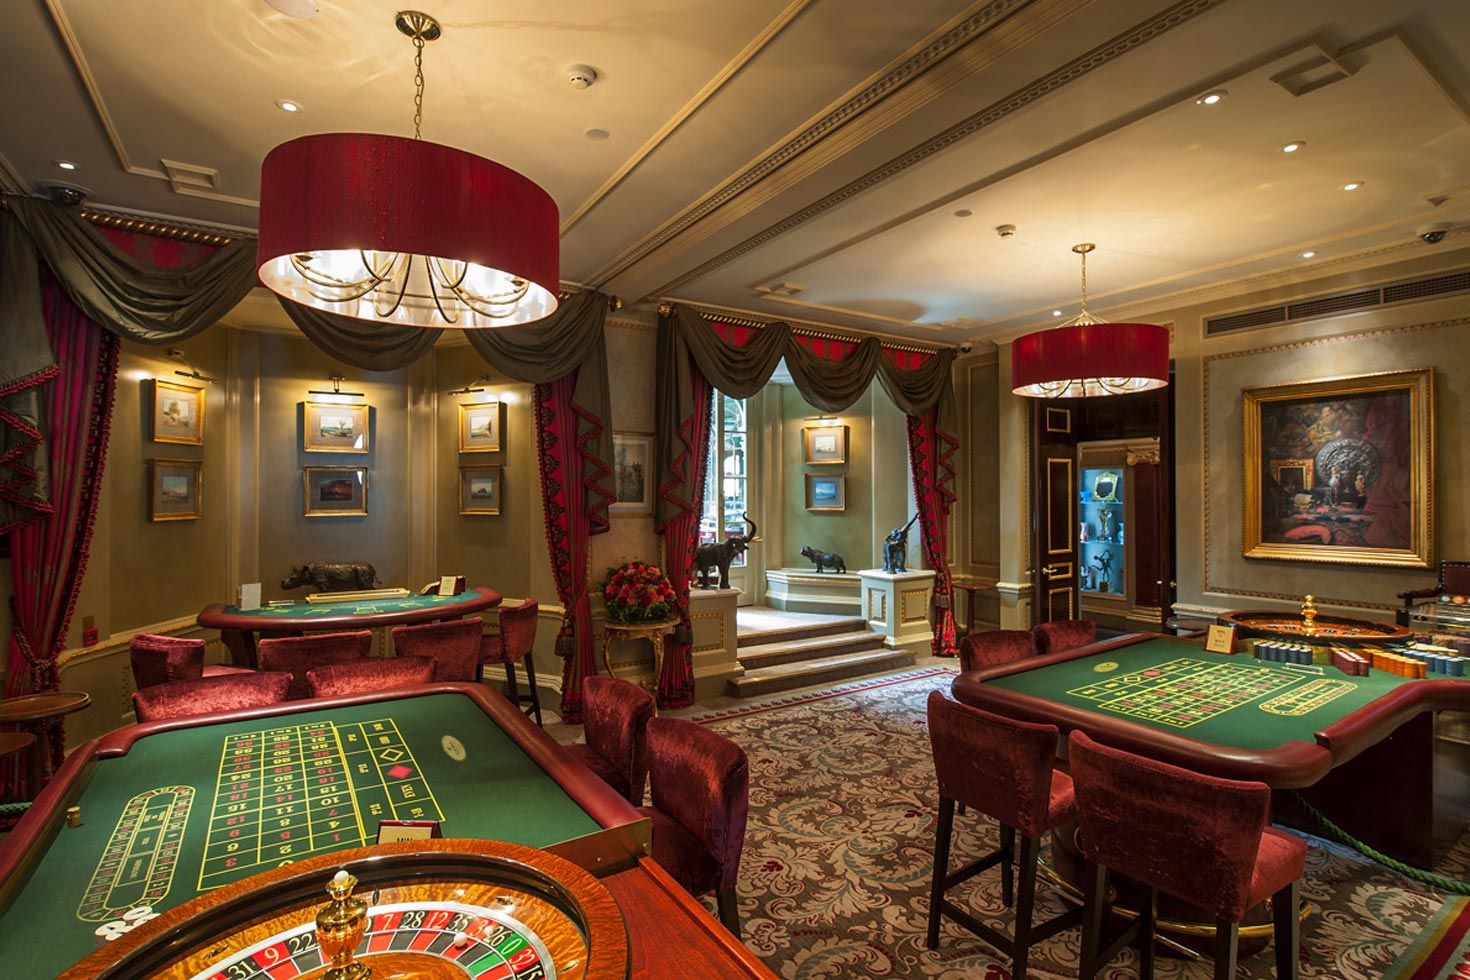 Casino Room